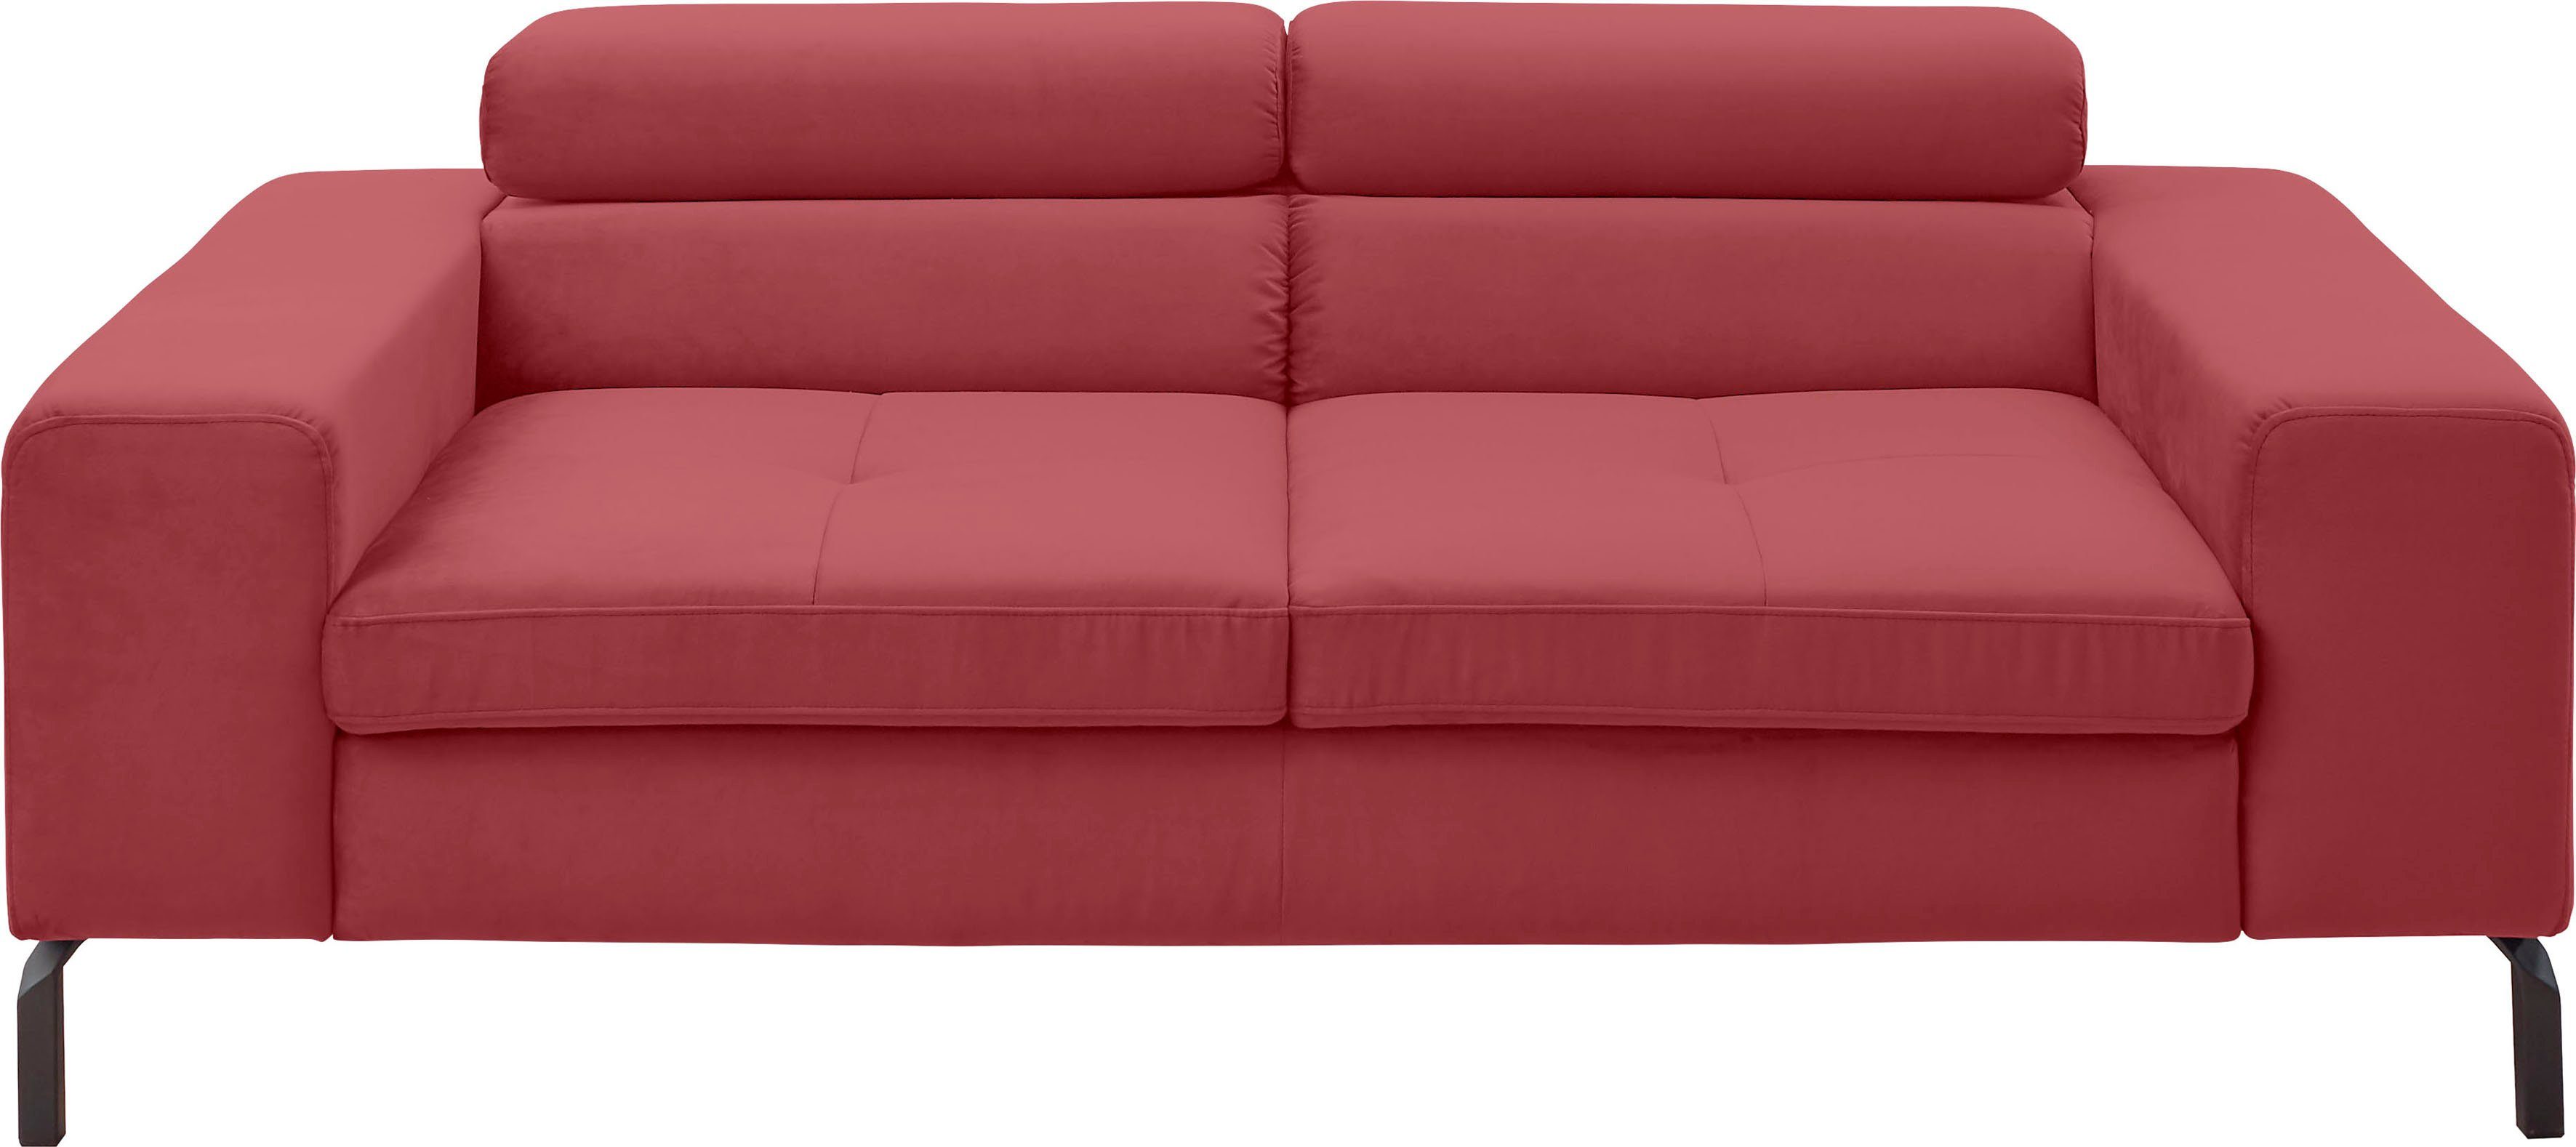 Musterring 2-Sitzer Felicia red Sitzvorzug, branded inklusive by Due, Wahlweise Kopfteilverstellung GALLERY mit M